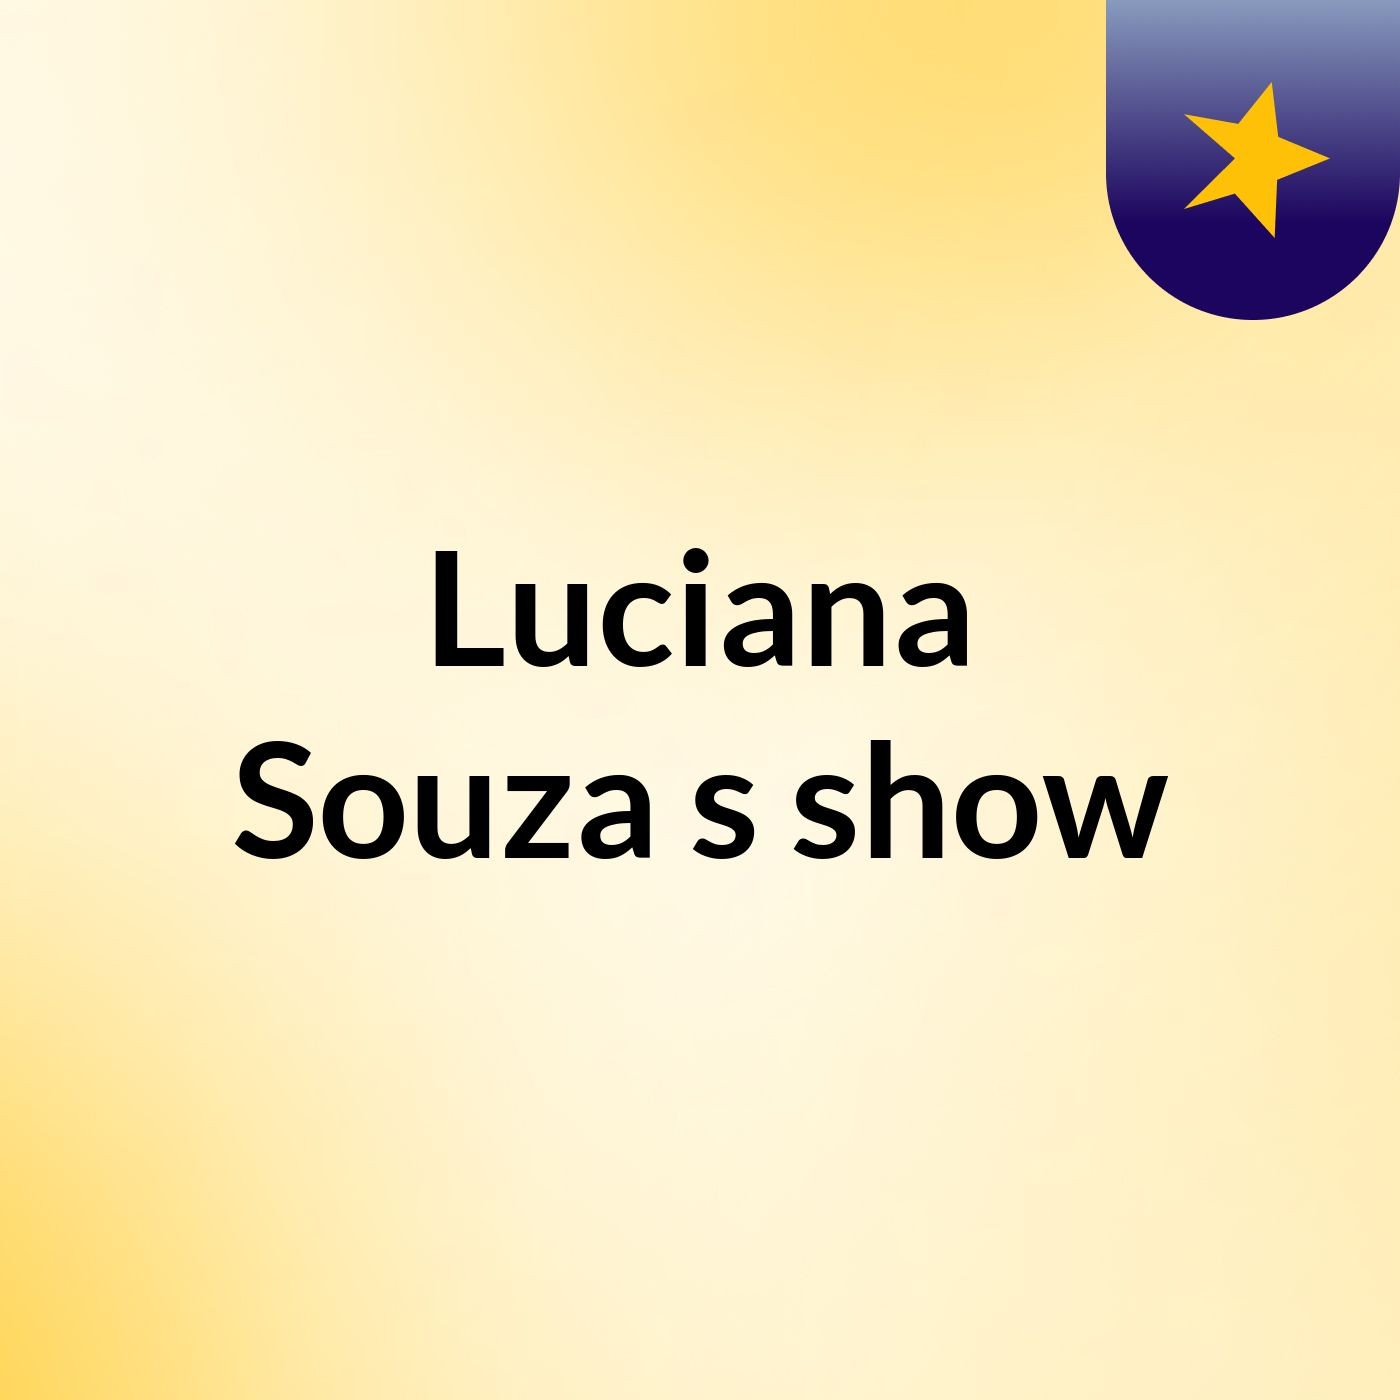 Luciana Souza's show